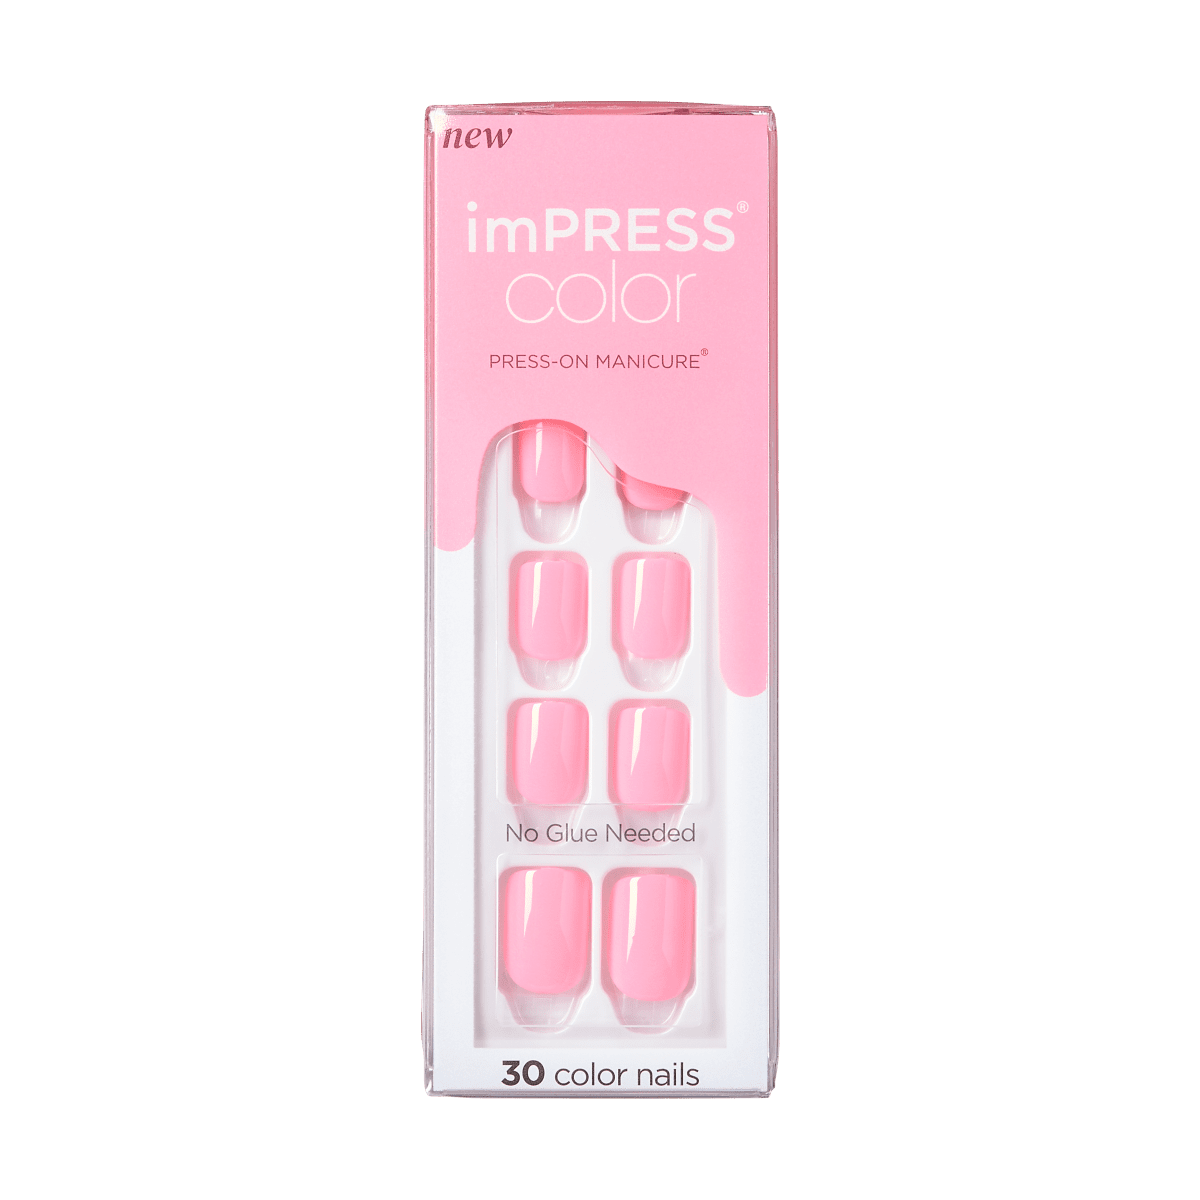 imPRESS Color Press-On Manicure Petite - Carnation